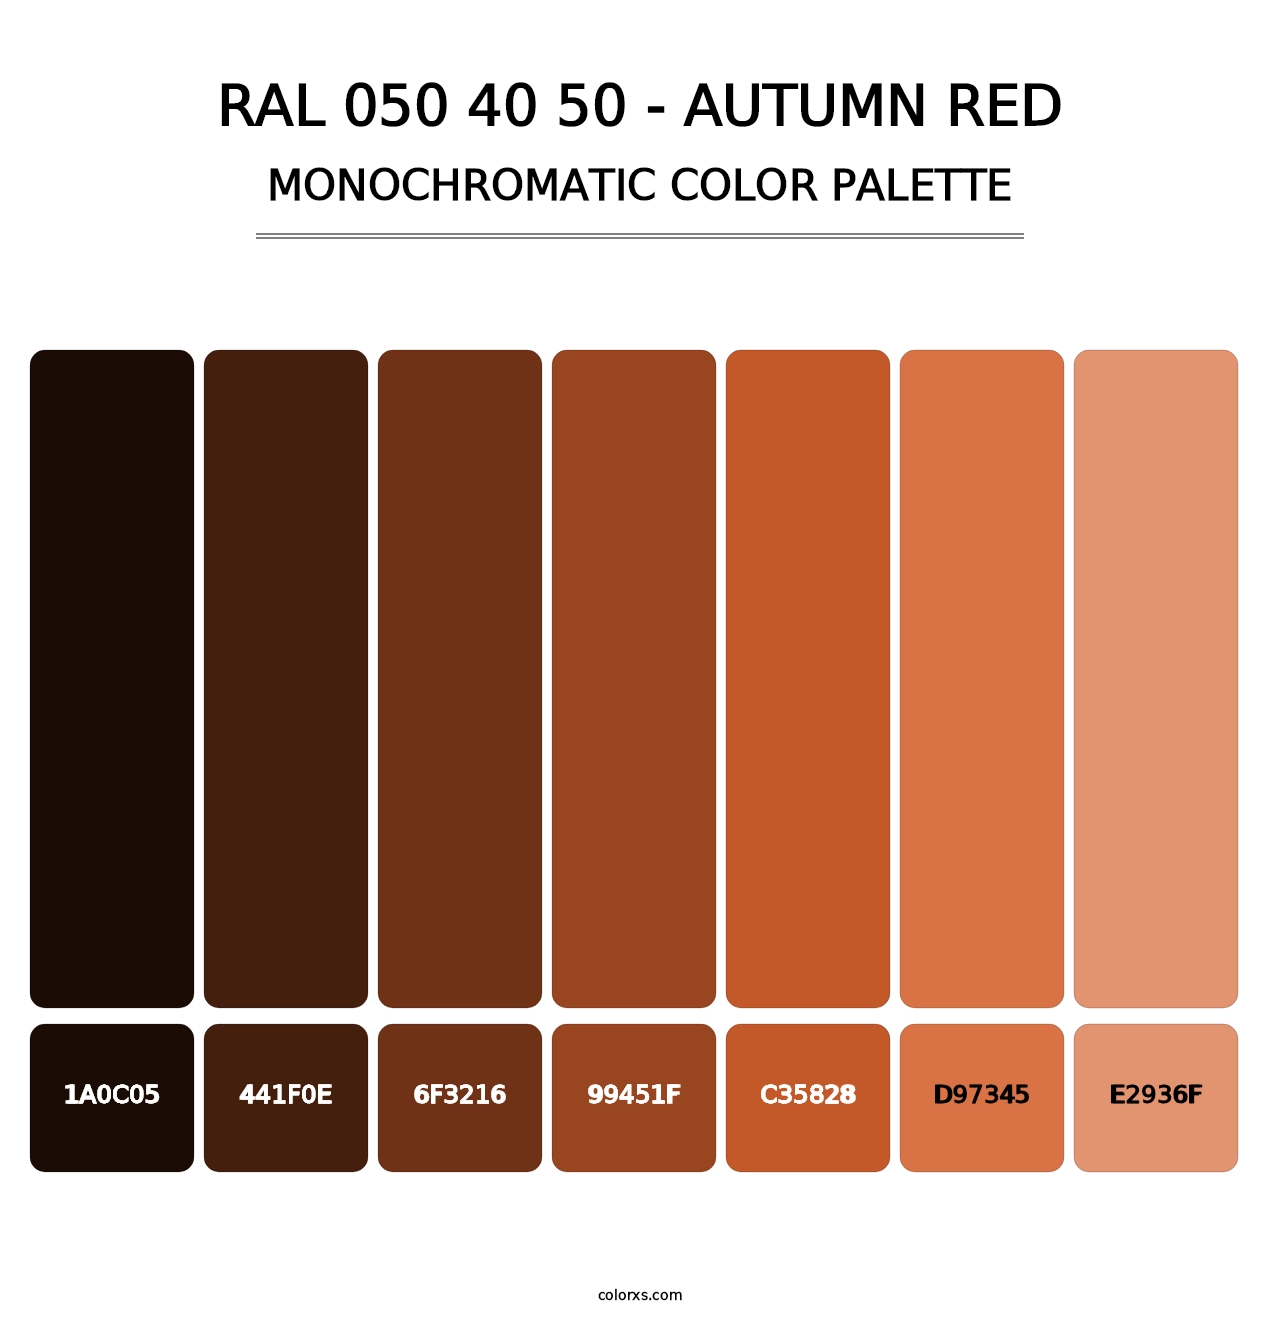 RAL 050 40 50 - Autumn Red - Monochromatic Color Palette